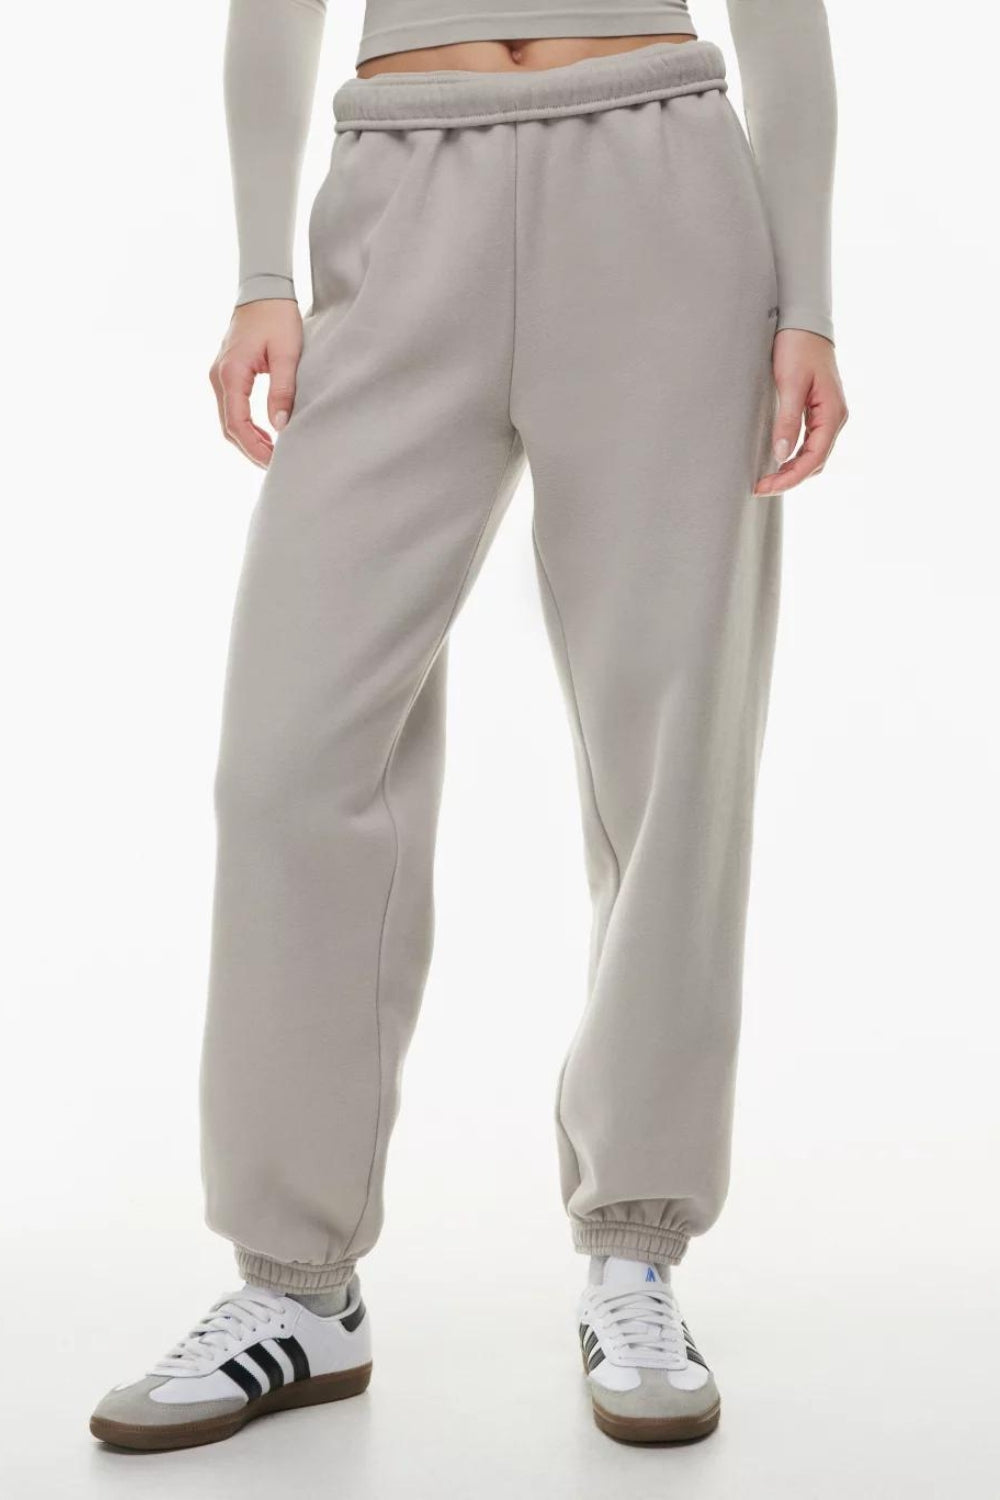 Cascade grey trouser